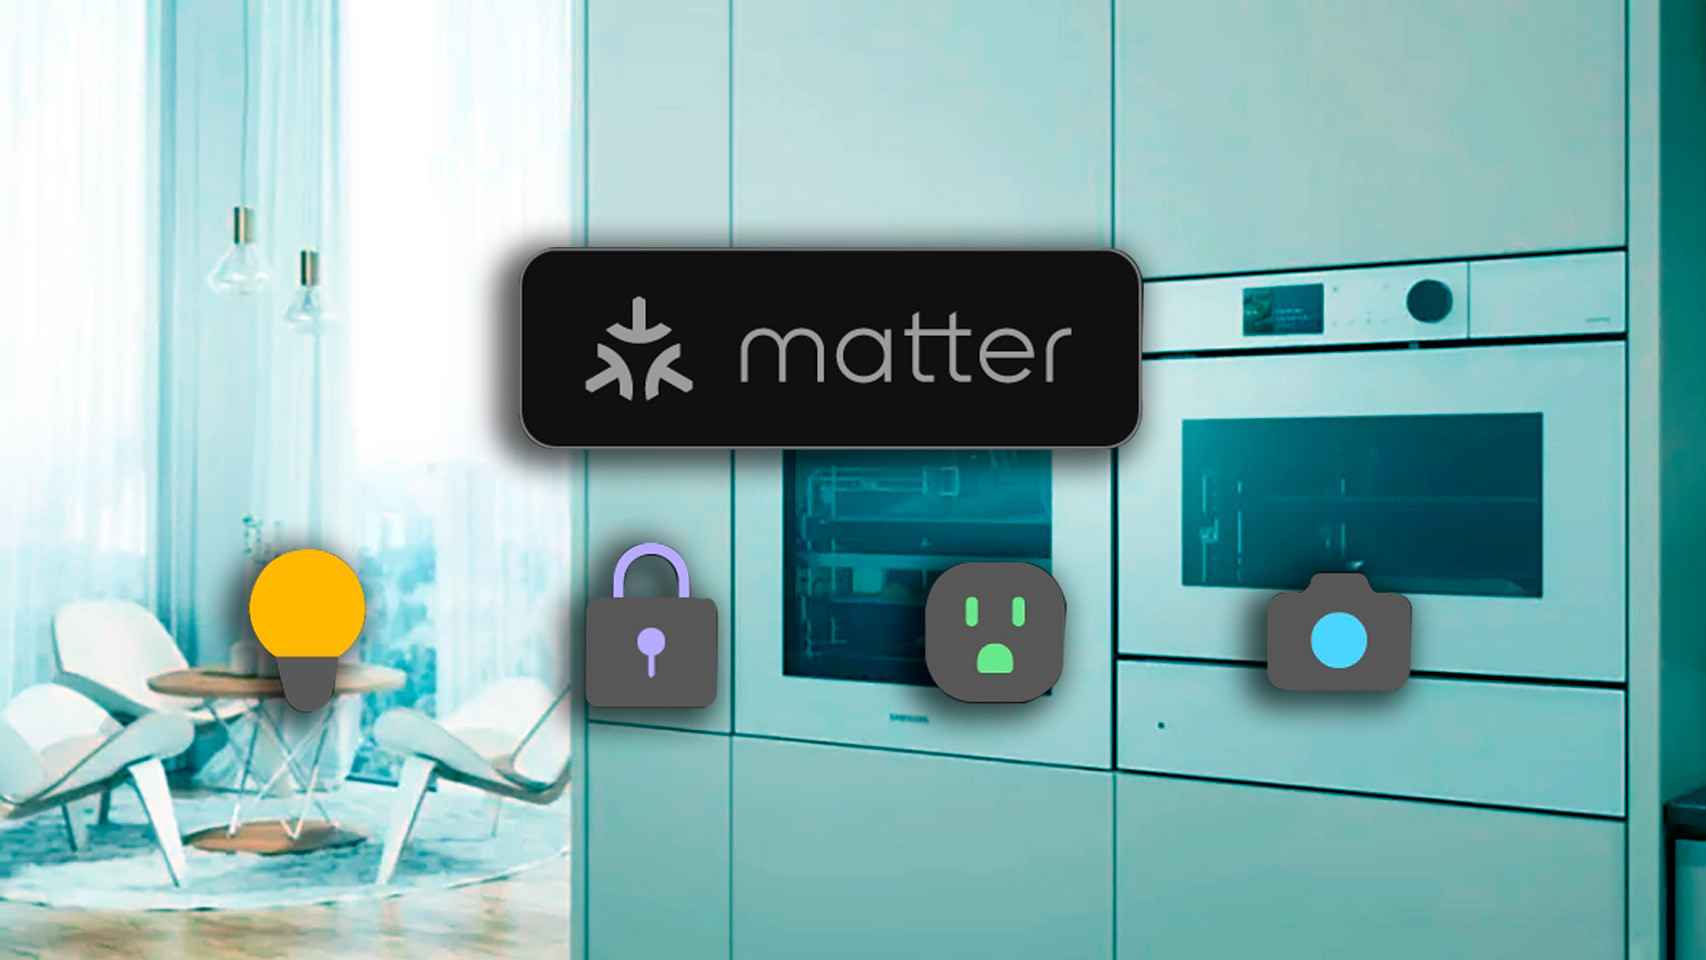 smartthings-de-samsung-se-actualiza-en-espana-para-dar-soporte-a-matter-y-conectarse-a-mas-dispositivos